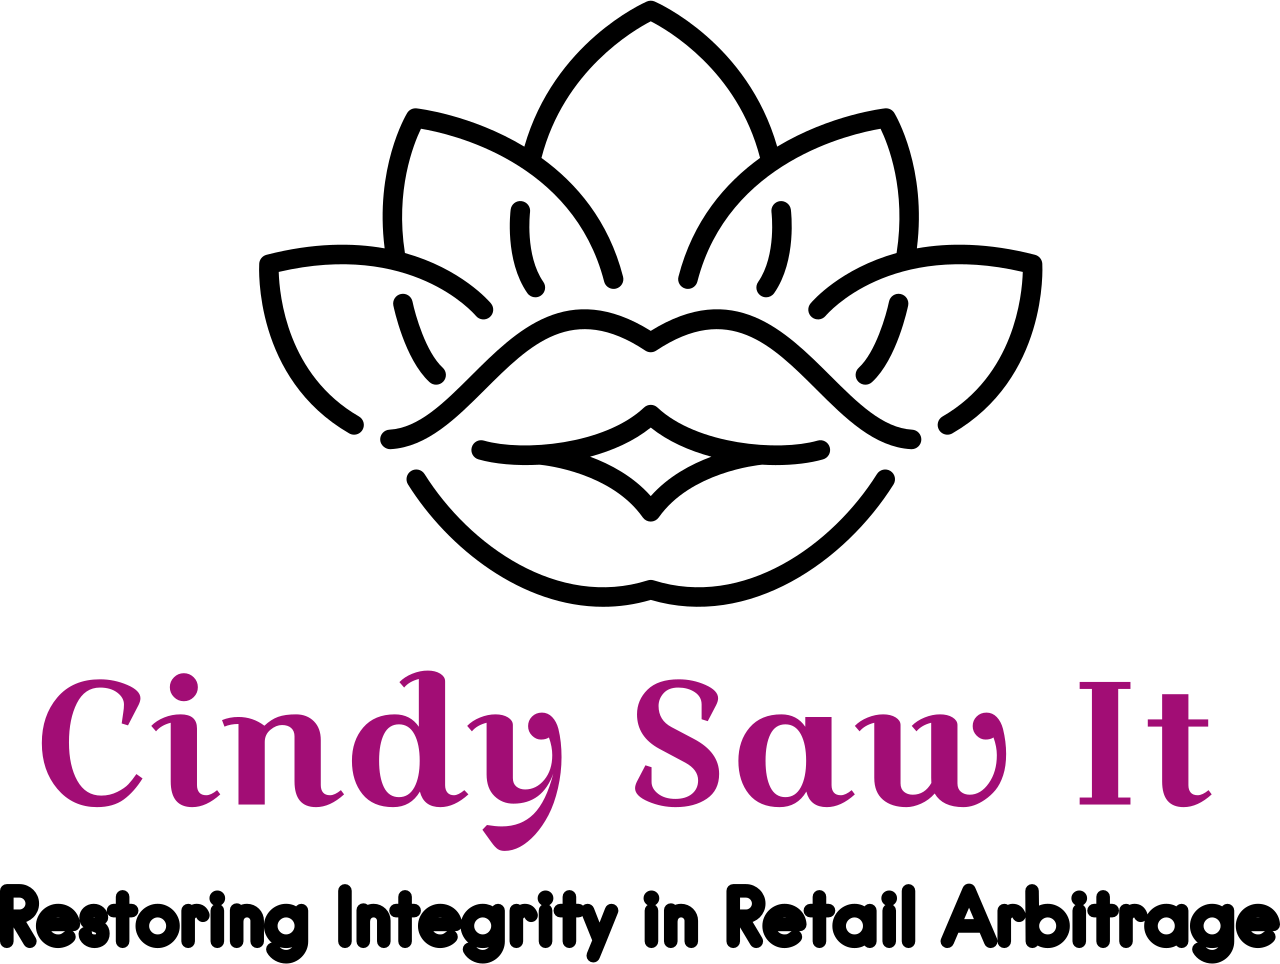 Cindy Saw It 's logo